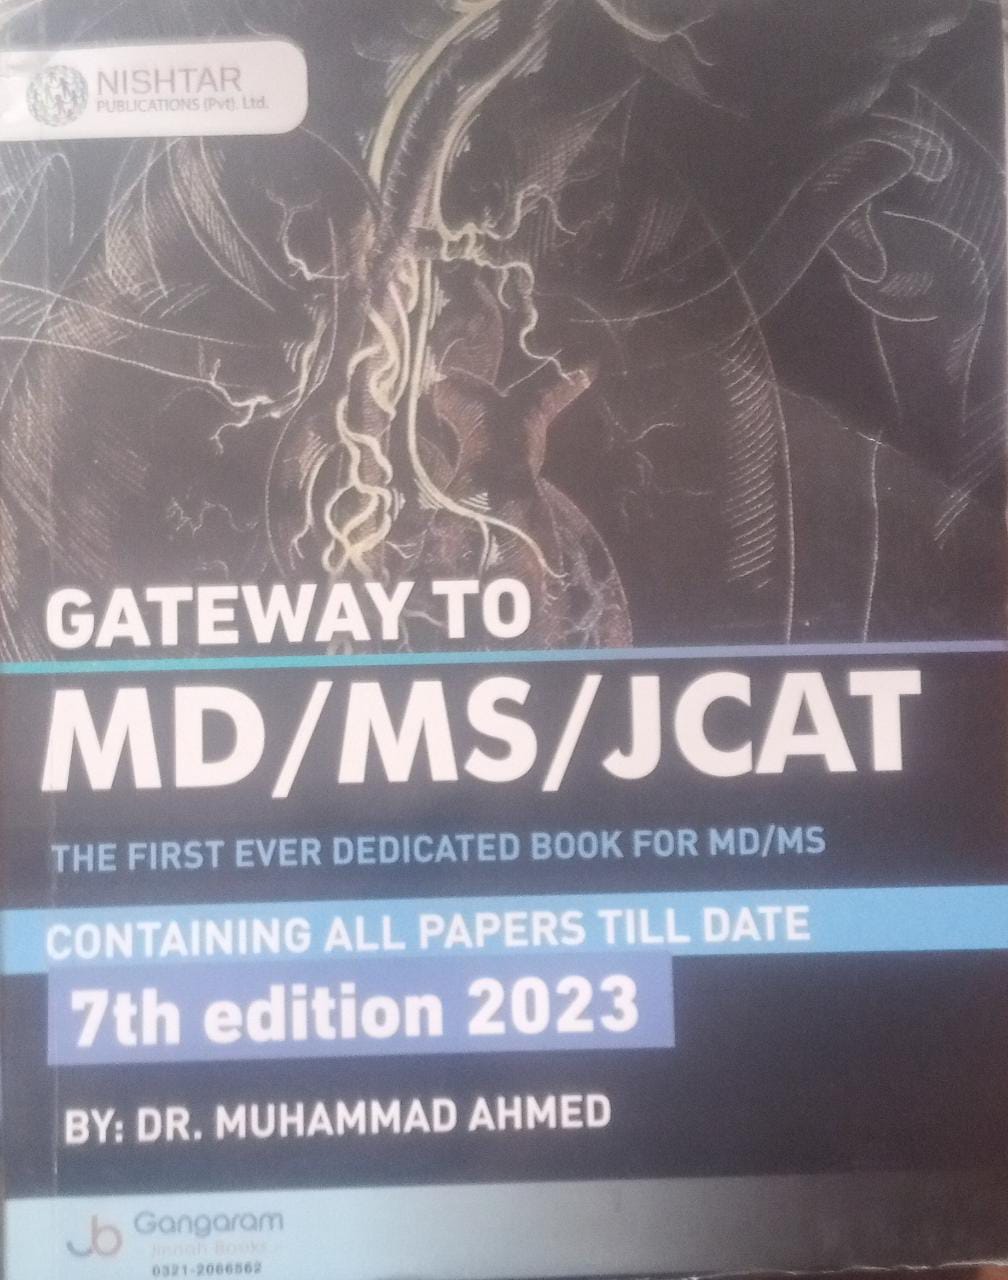 gateway to md i ms jcat, 7e